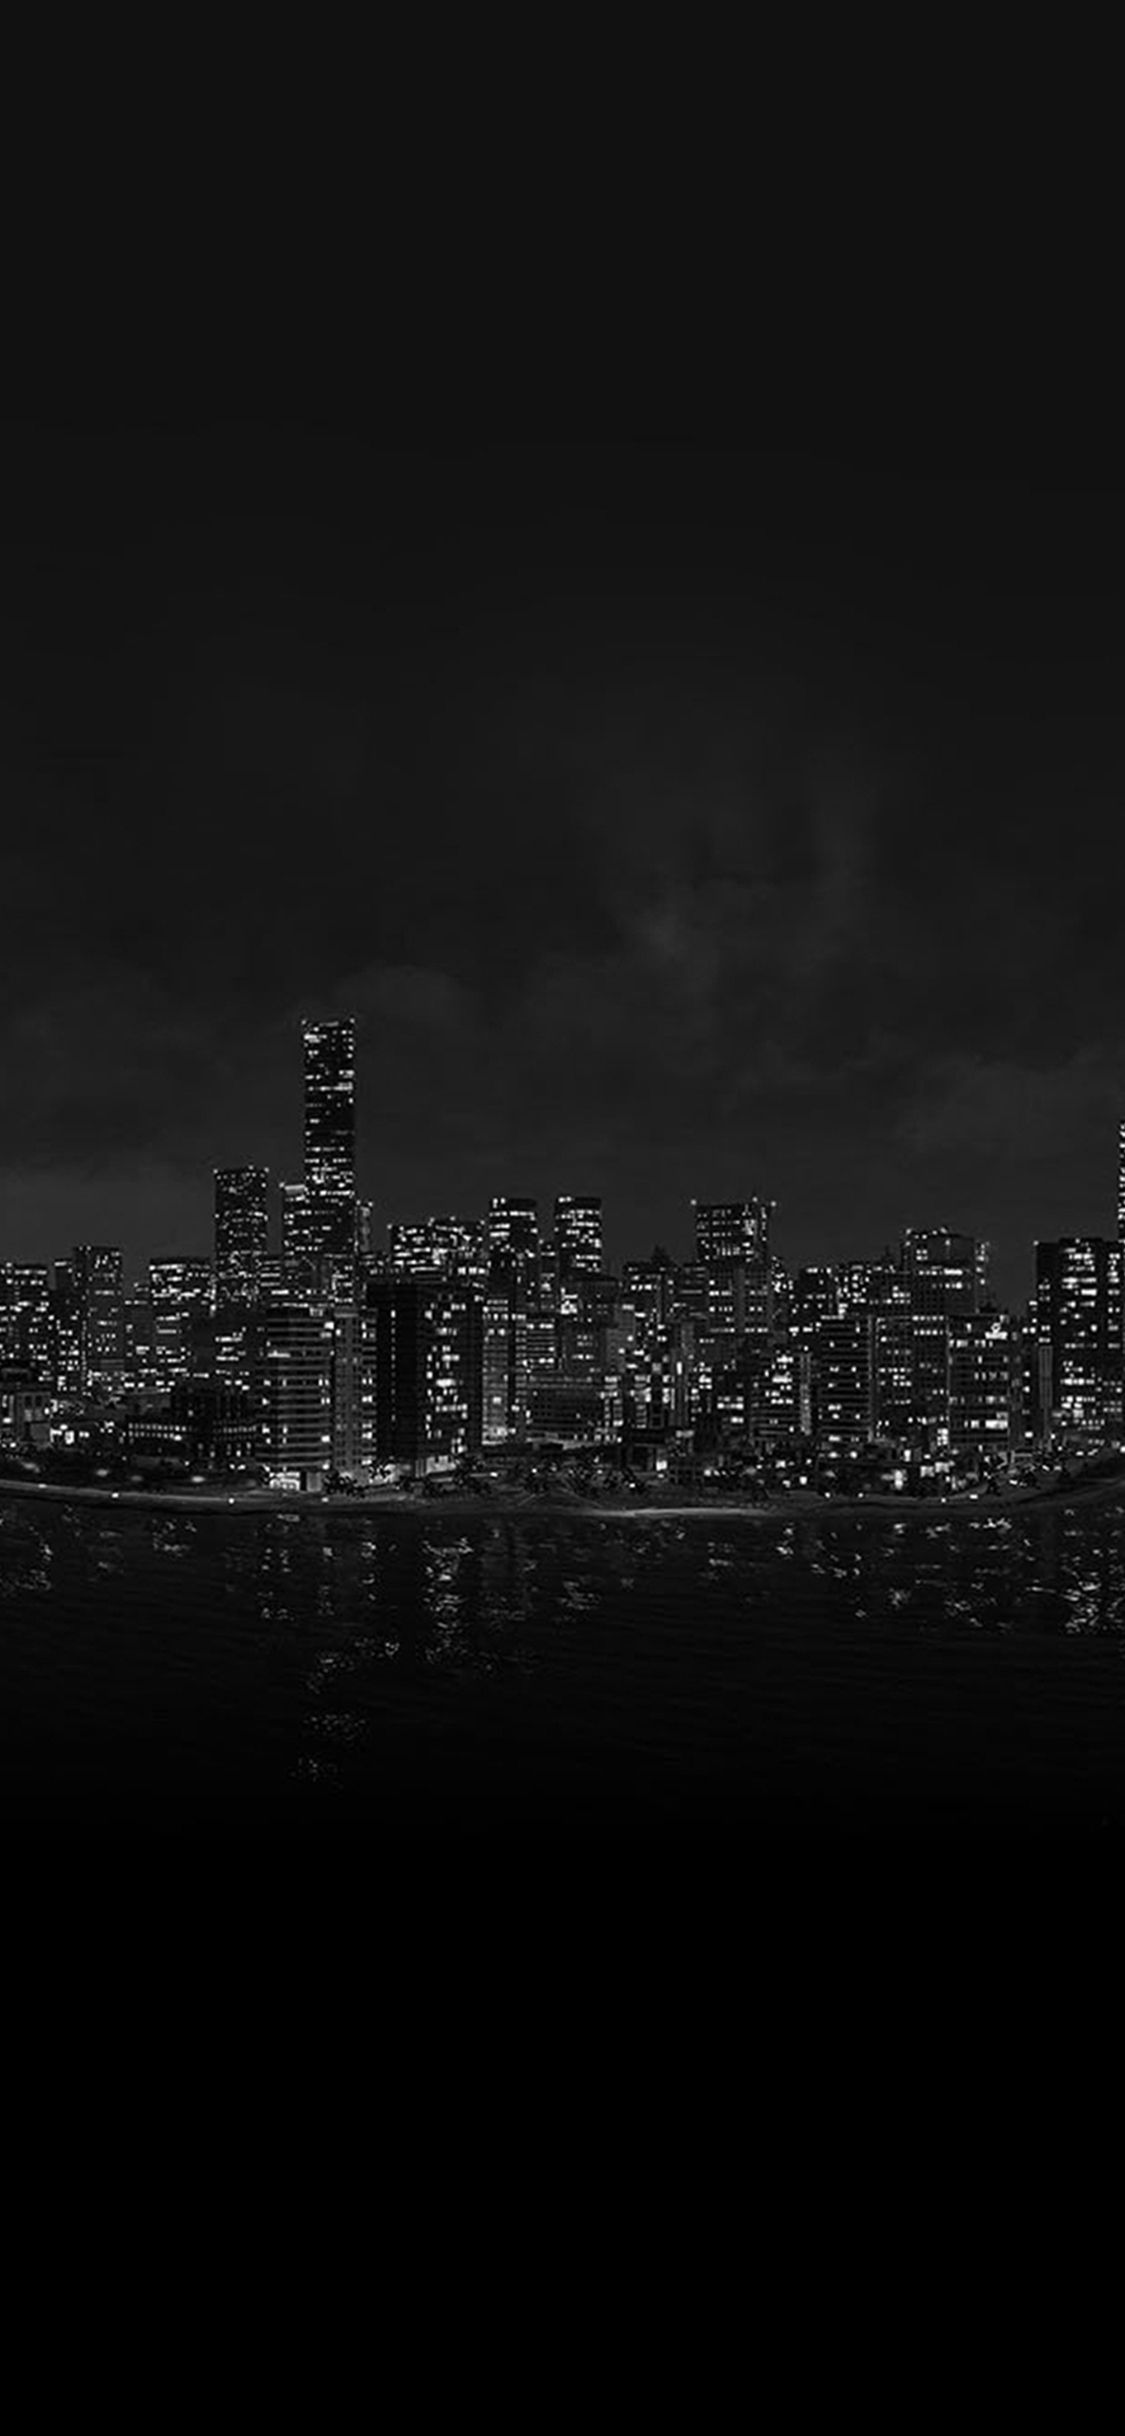 WatcHDog Night City Light From Sea iPhone X Wallpaper